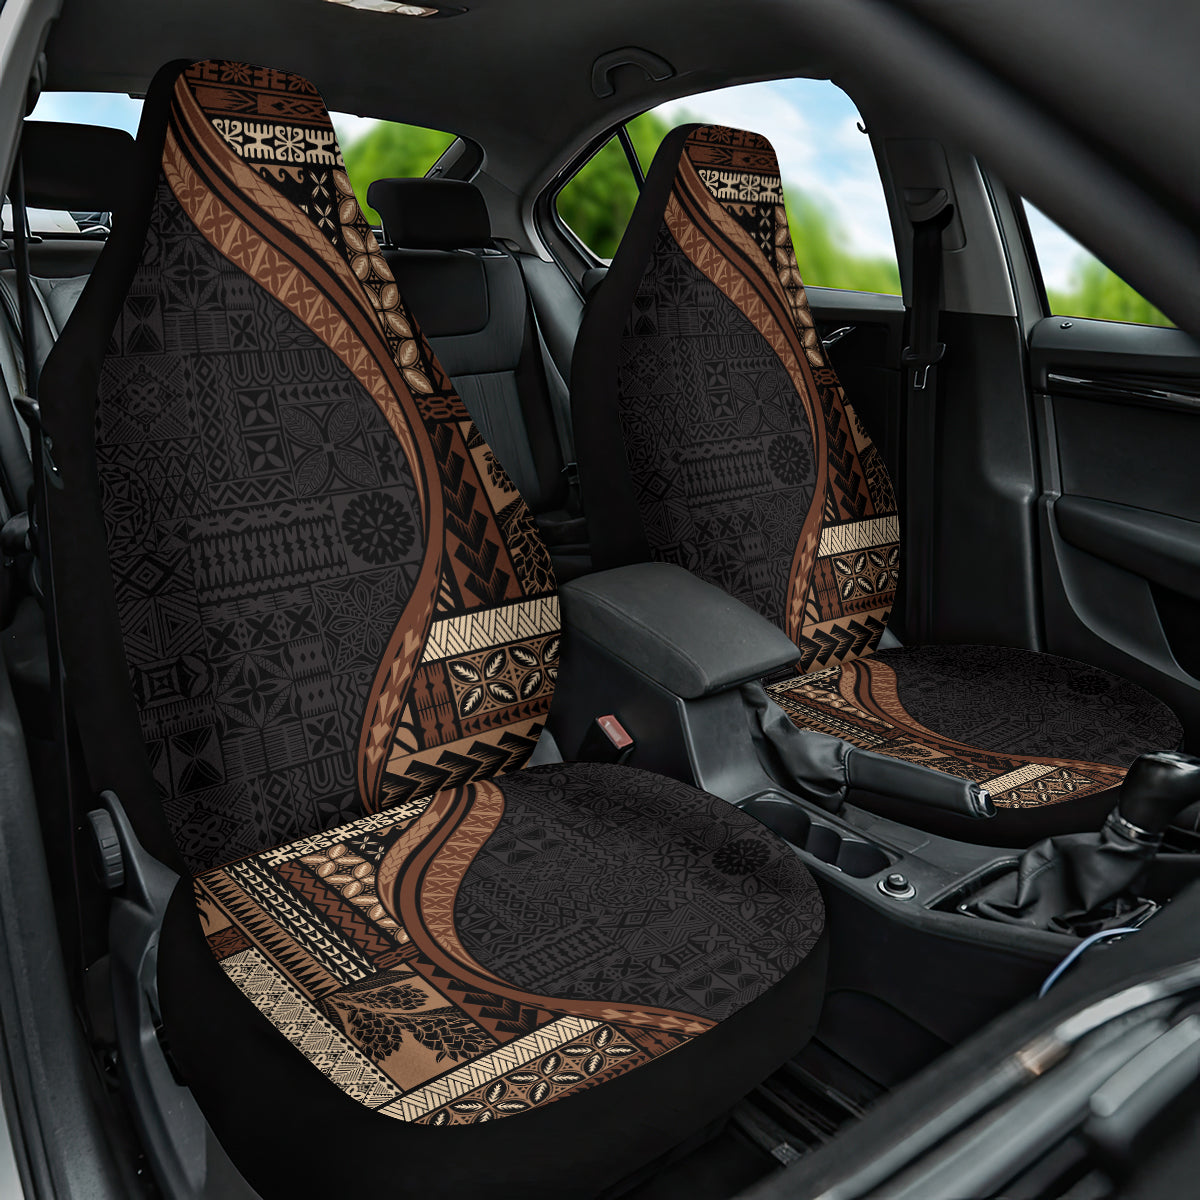 Samoa Siapo Motif and Tapa Pattern Half Style Car Seat Cover Black Color